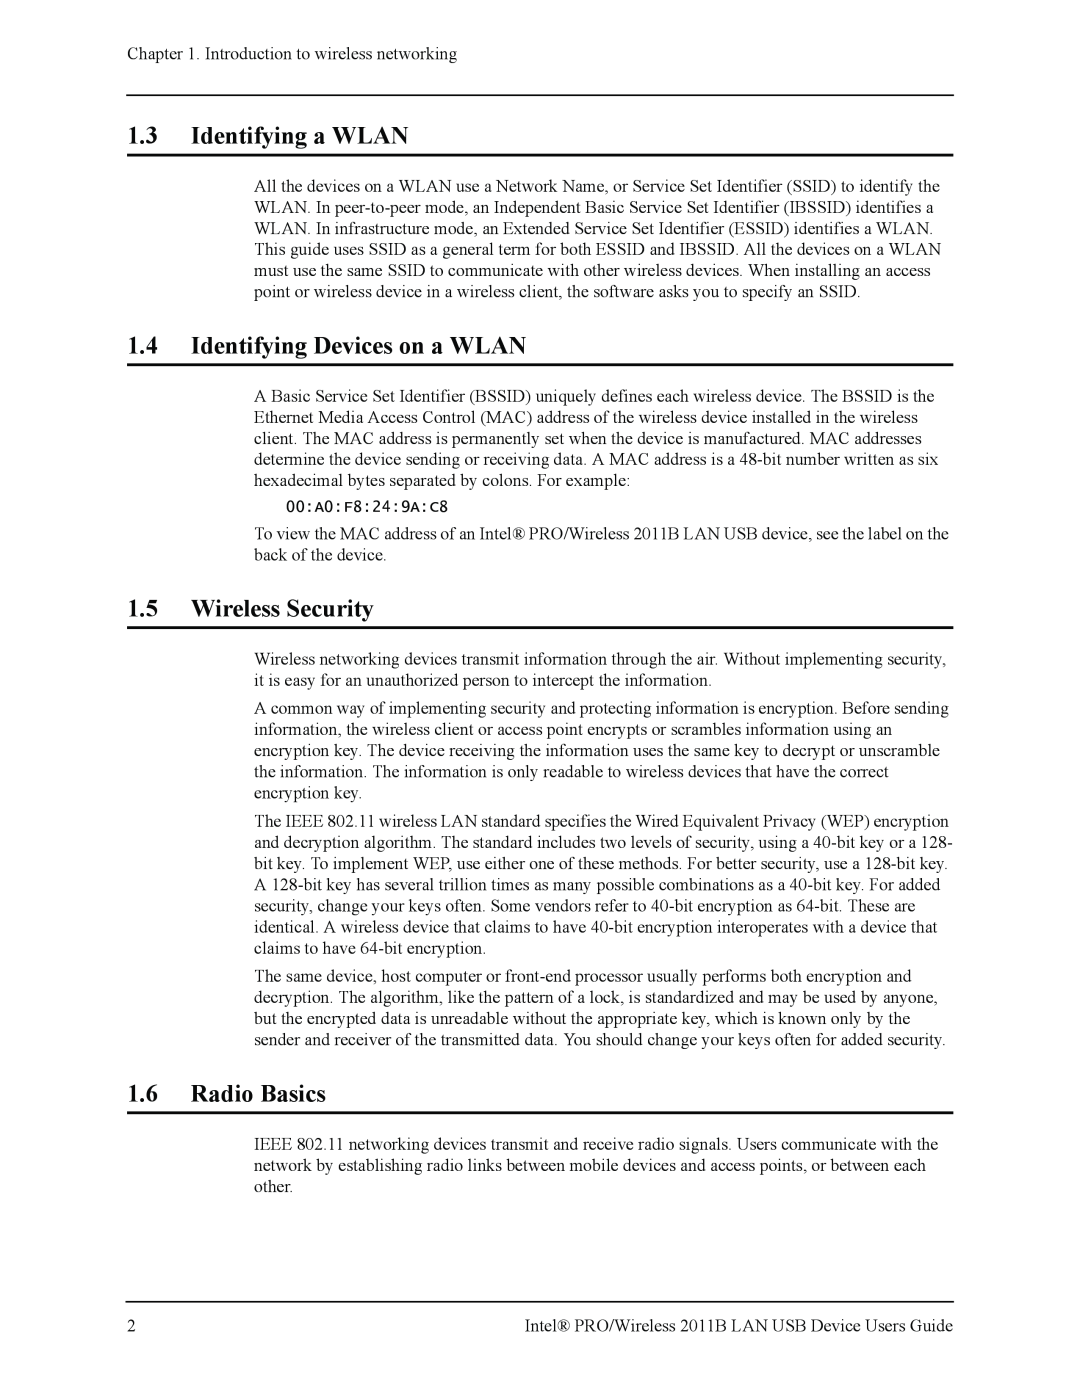 Intel 2011B manual 1.3Identifying a WLAN, 1.4Identifying Devices on a WLAN, 1.5Wireless Security, 1.6Radio Basics 